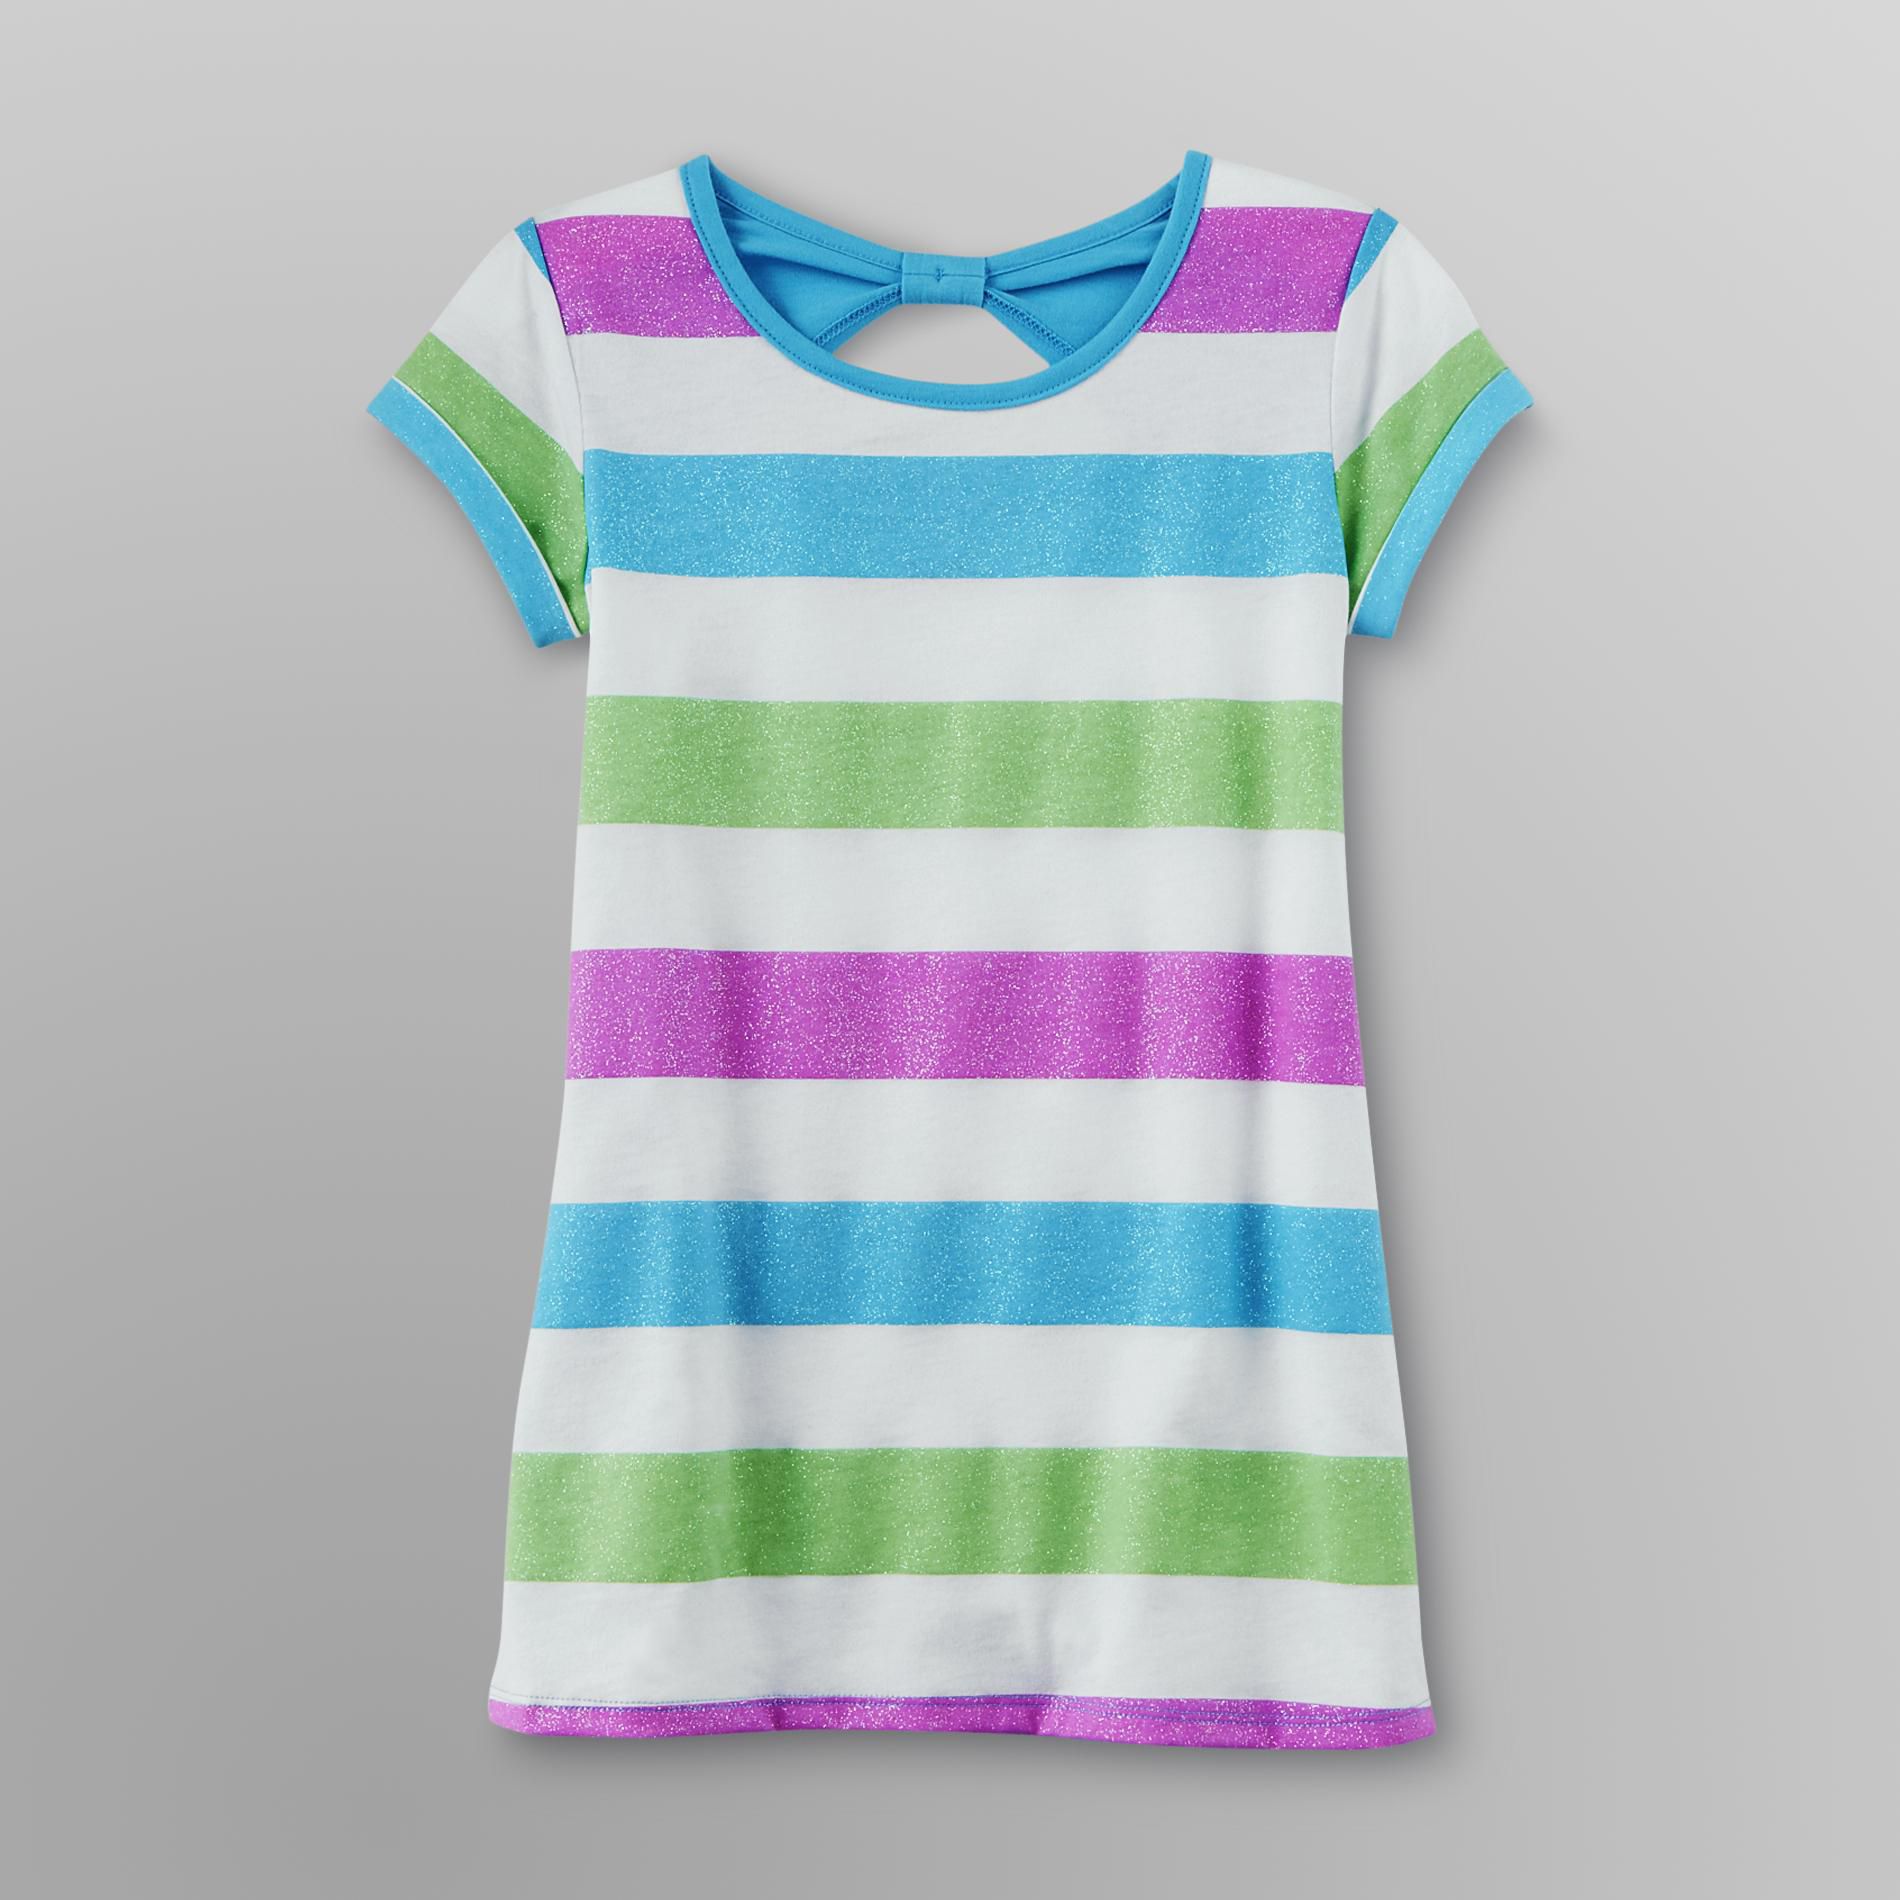 Basic Editions Girl's Keyhole Tunic Top - Glitter Stripes